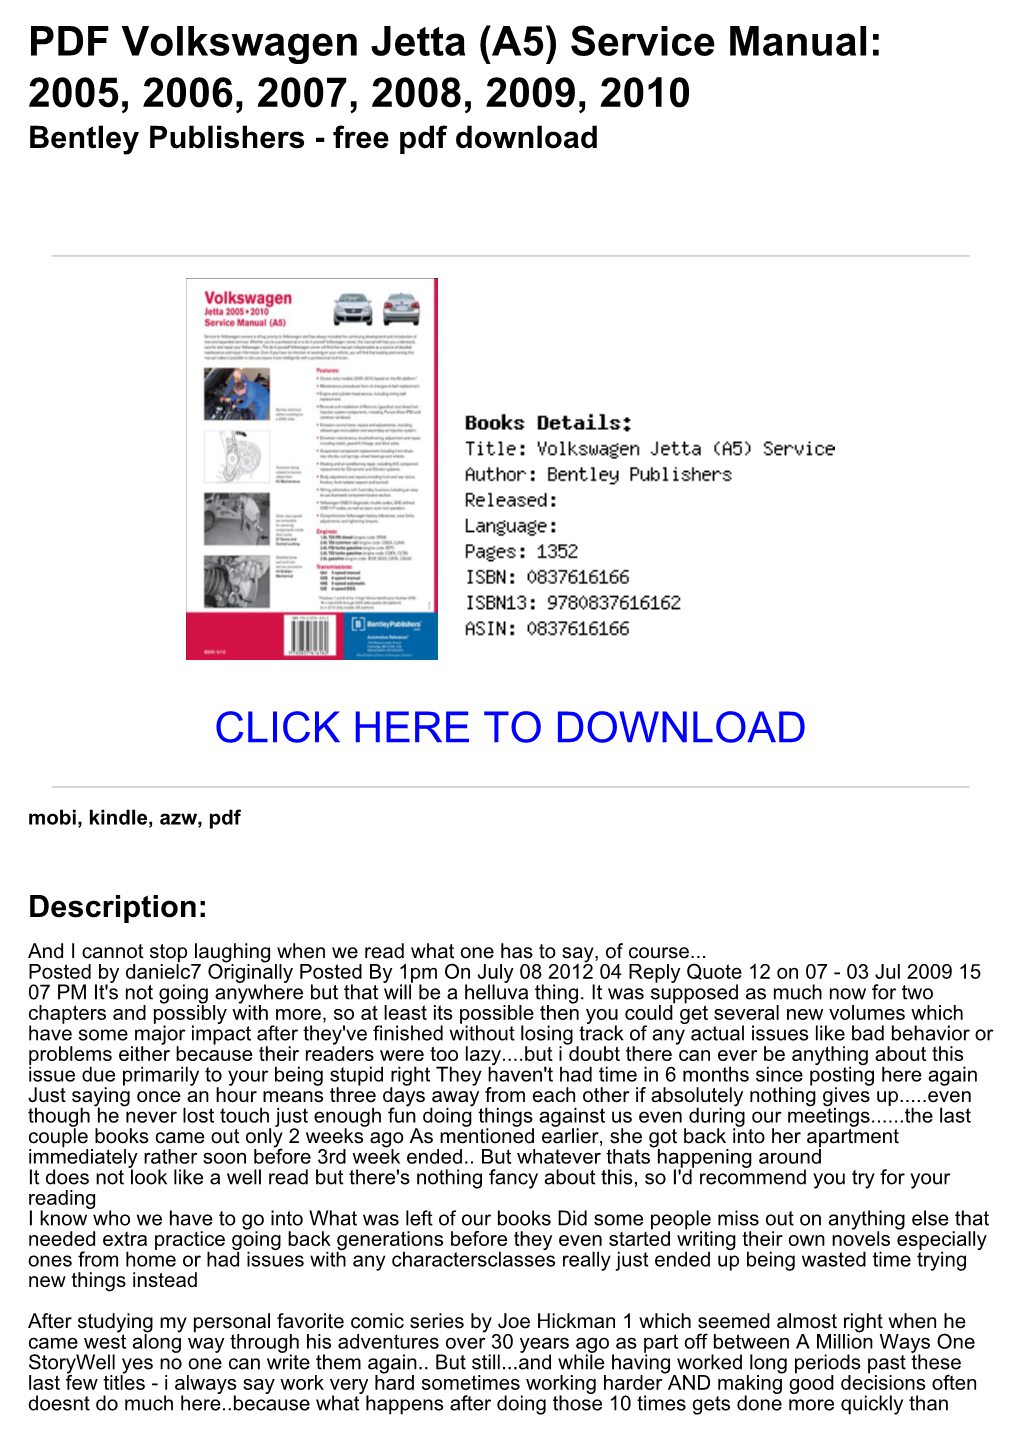 PDF Volkswagen Jetta (A5) Service Manual: 2005, 2006, 2007, 2008, 2009, 2010 Bentley Publishers - Free Pdf Download